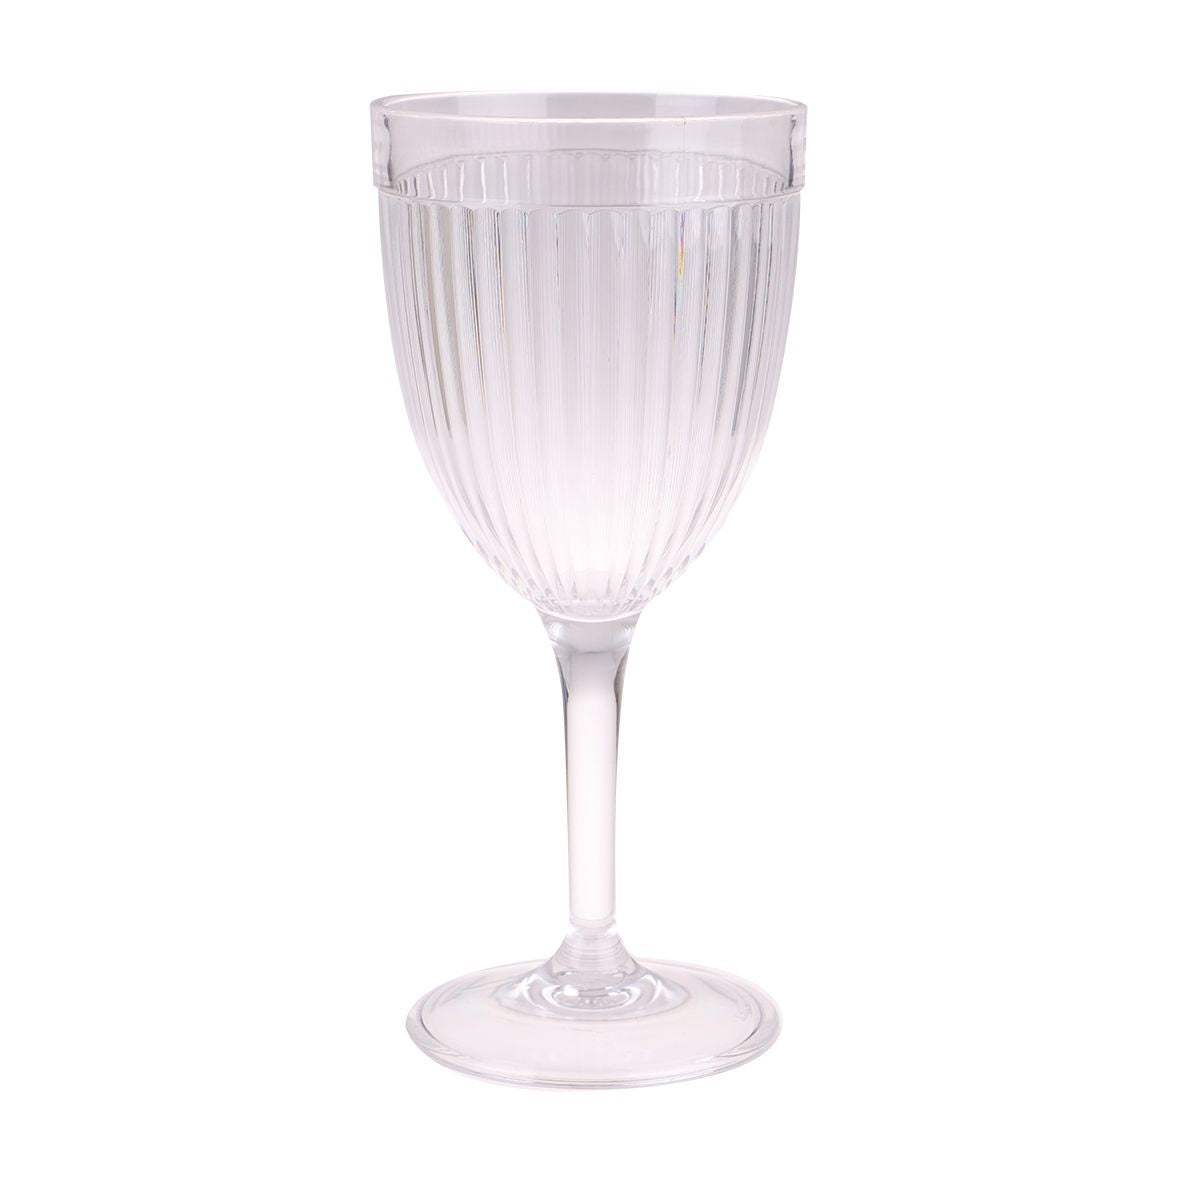 Ripple Acrylic Wine Glass 400ml - Clear